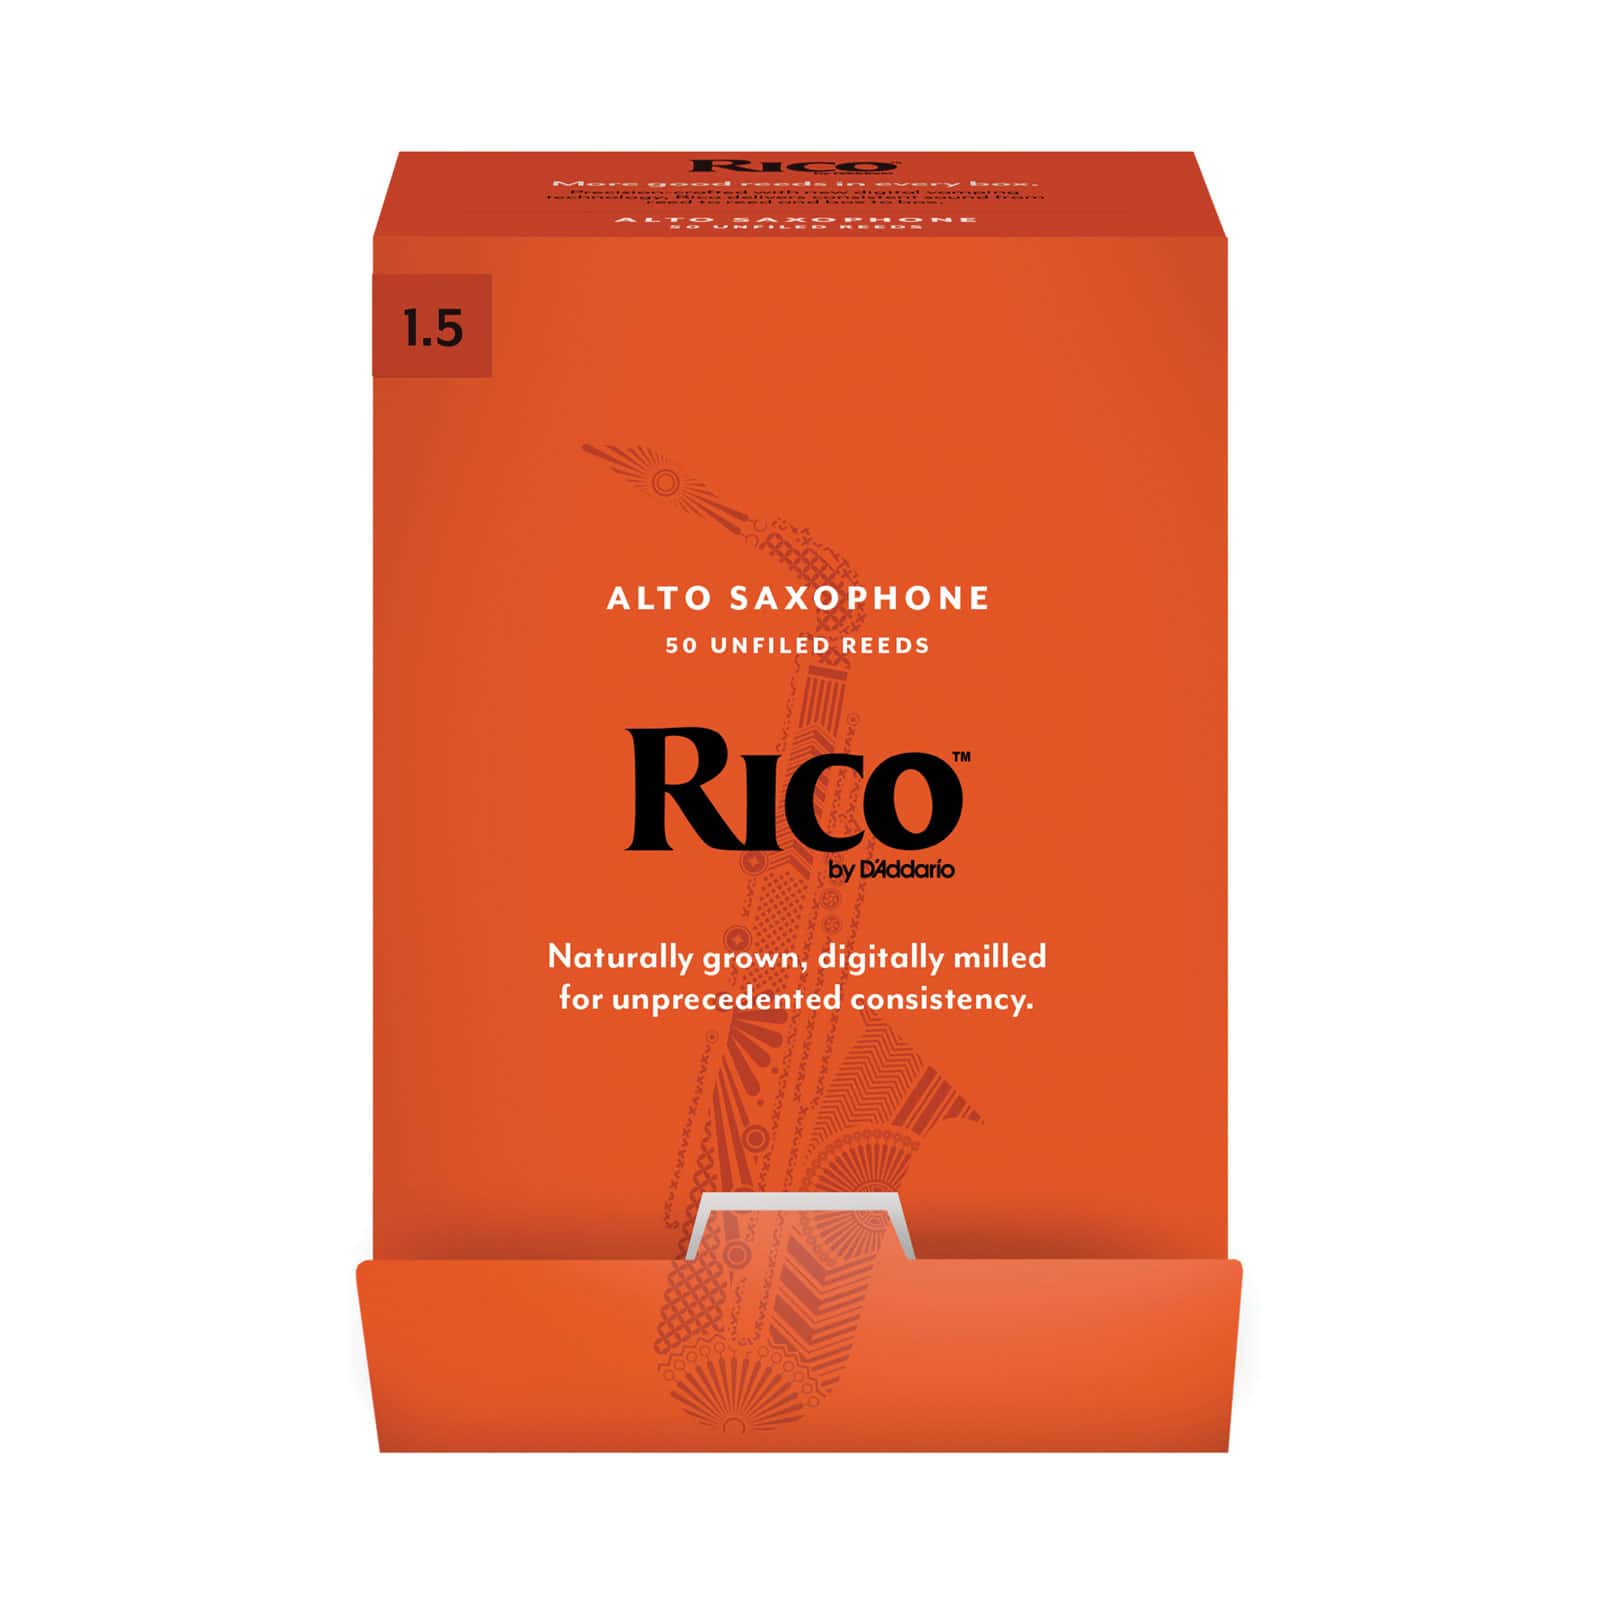 D'ADDARIO - RICO RJA0115-B50 - ALT-SAXOPHONE BLTTER RICO PAR - FORCE1,5 - BOX OF50